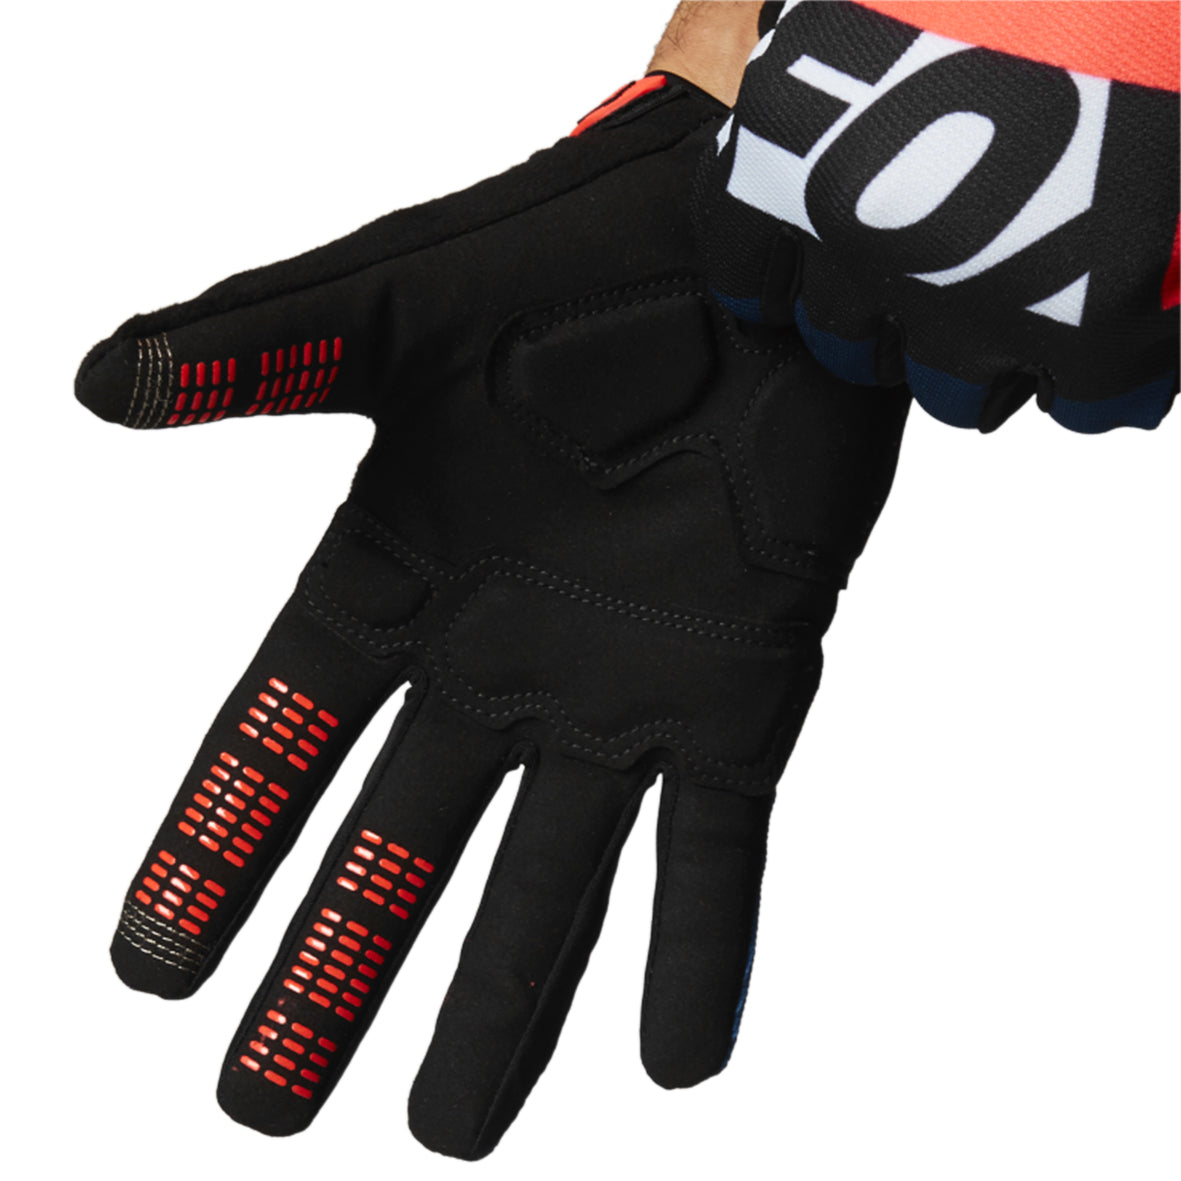 Fox Ranger Gel MTB Gloves (Atomic Punch)